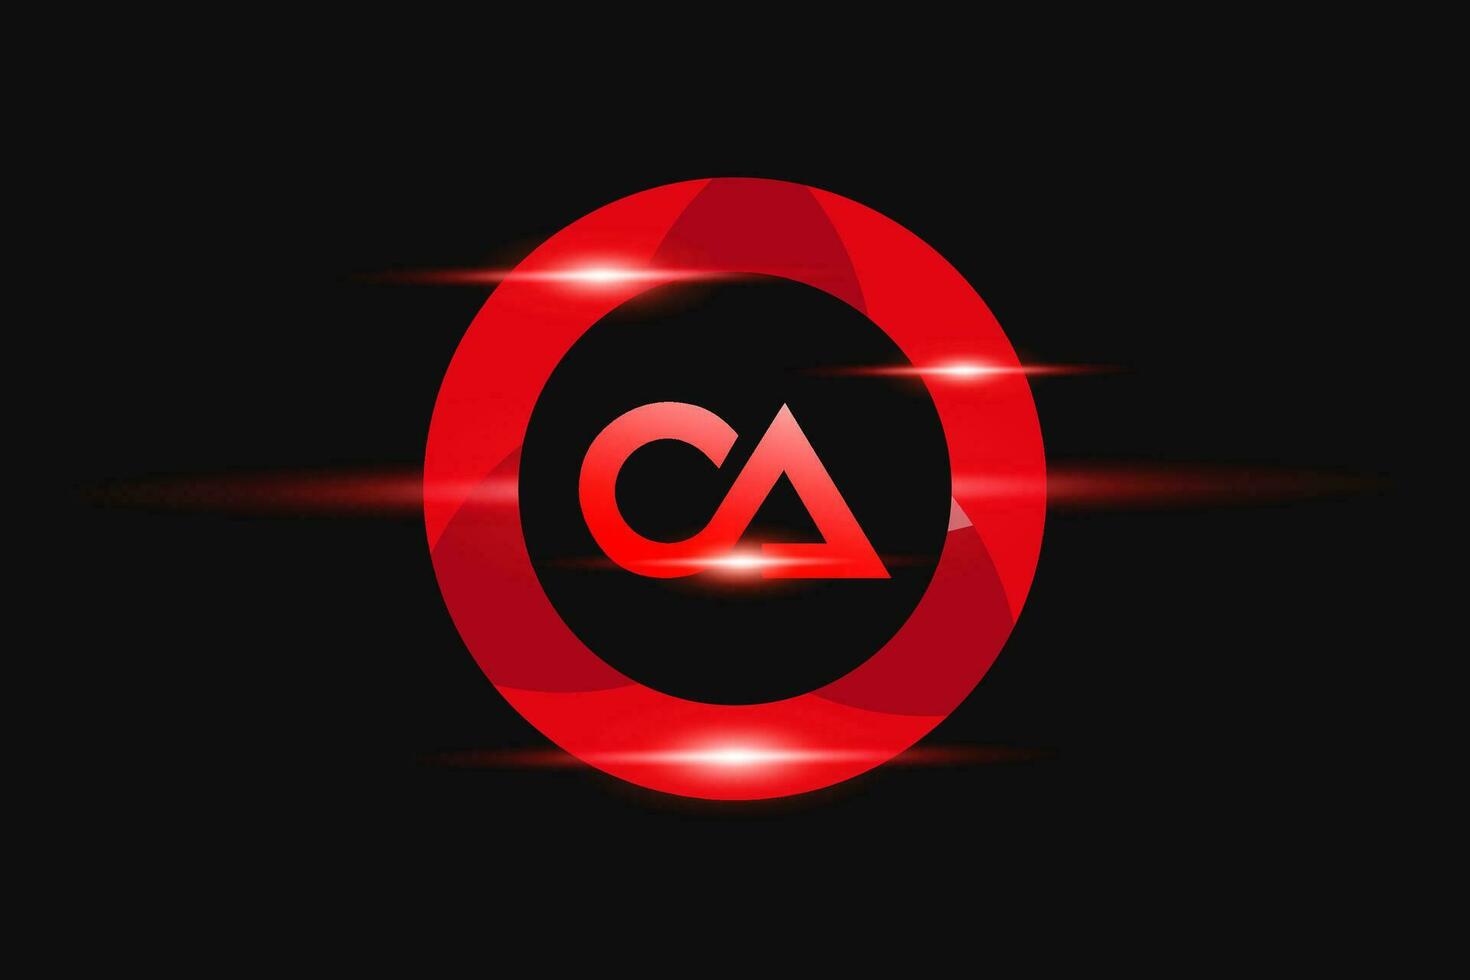 CA Red logo Design. Vector logo design for business.